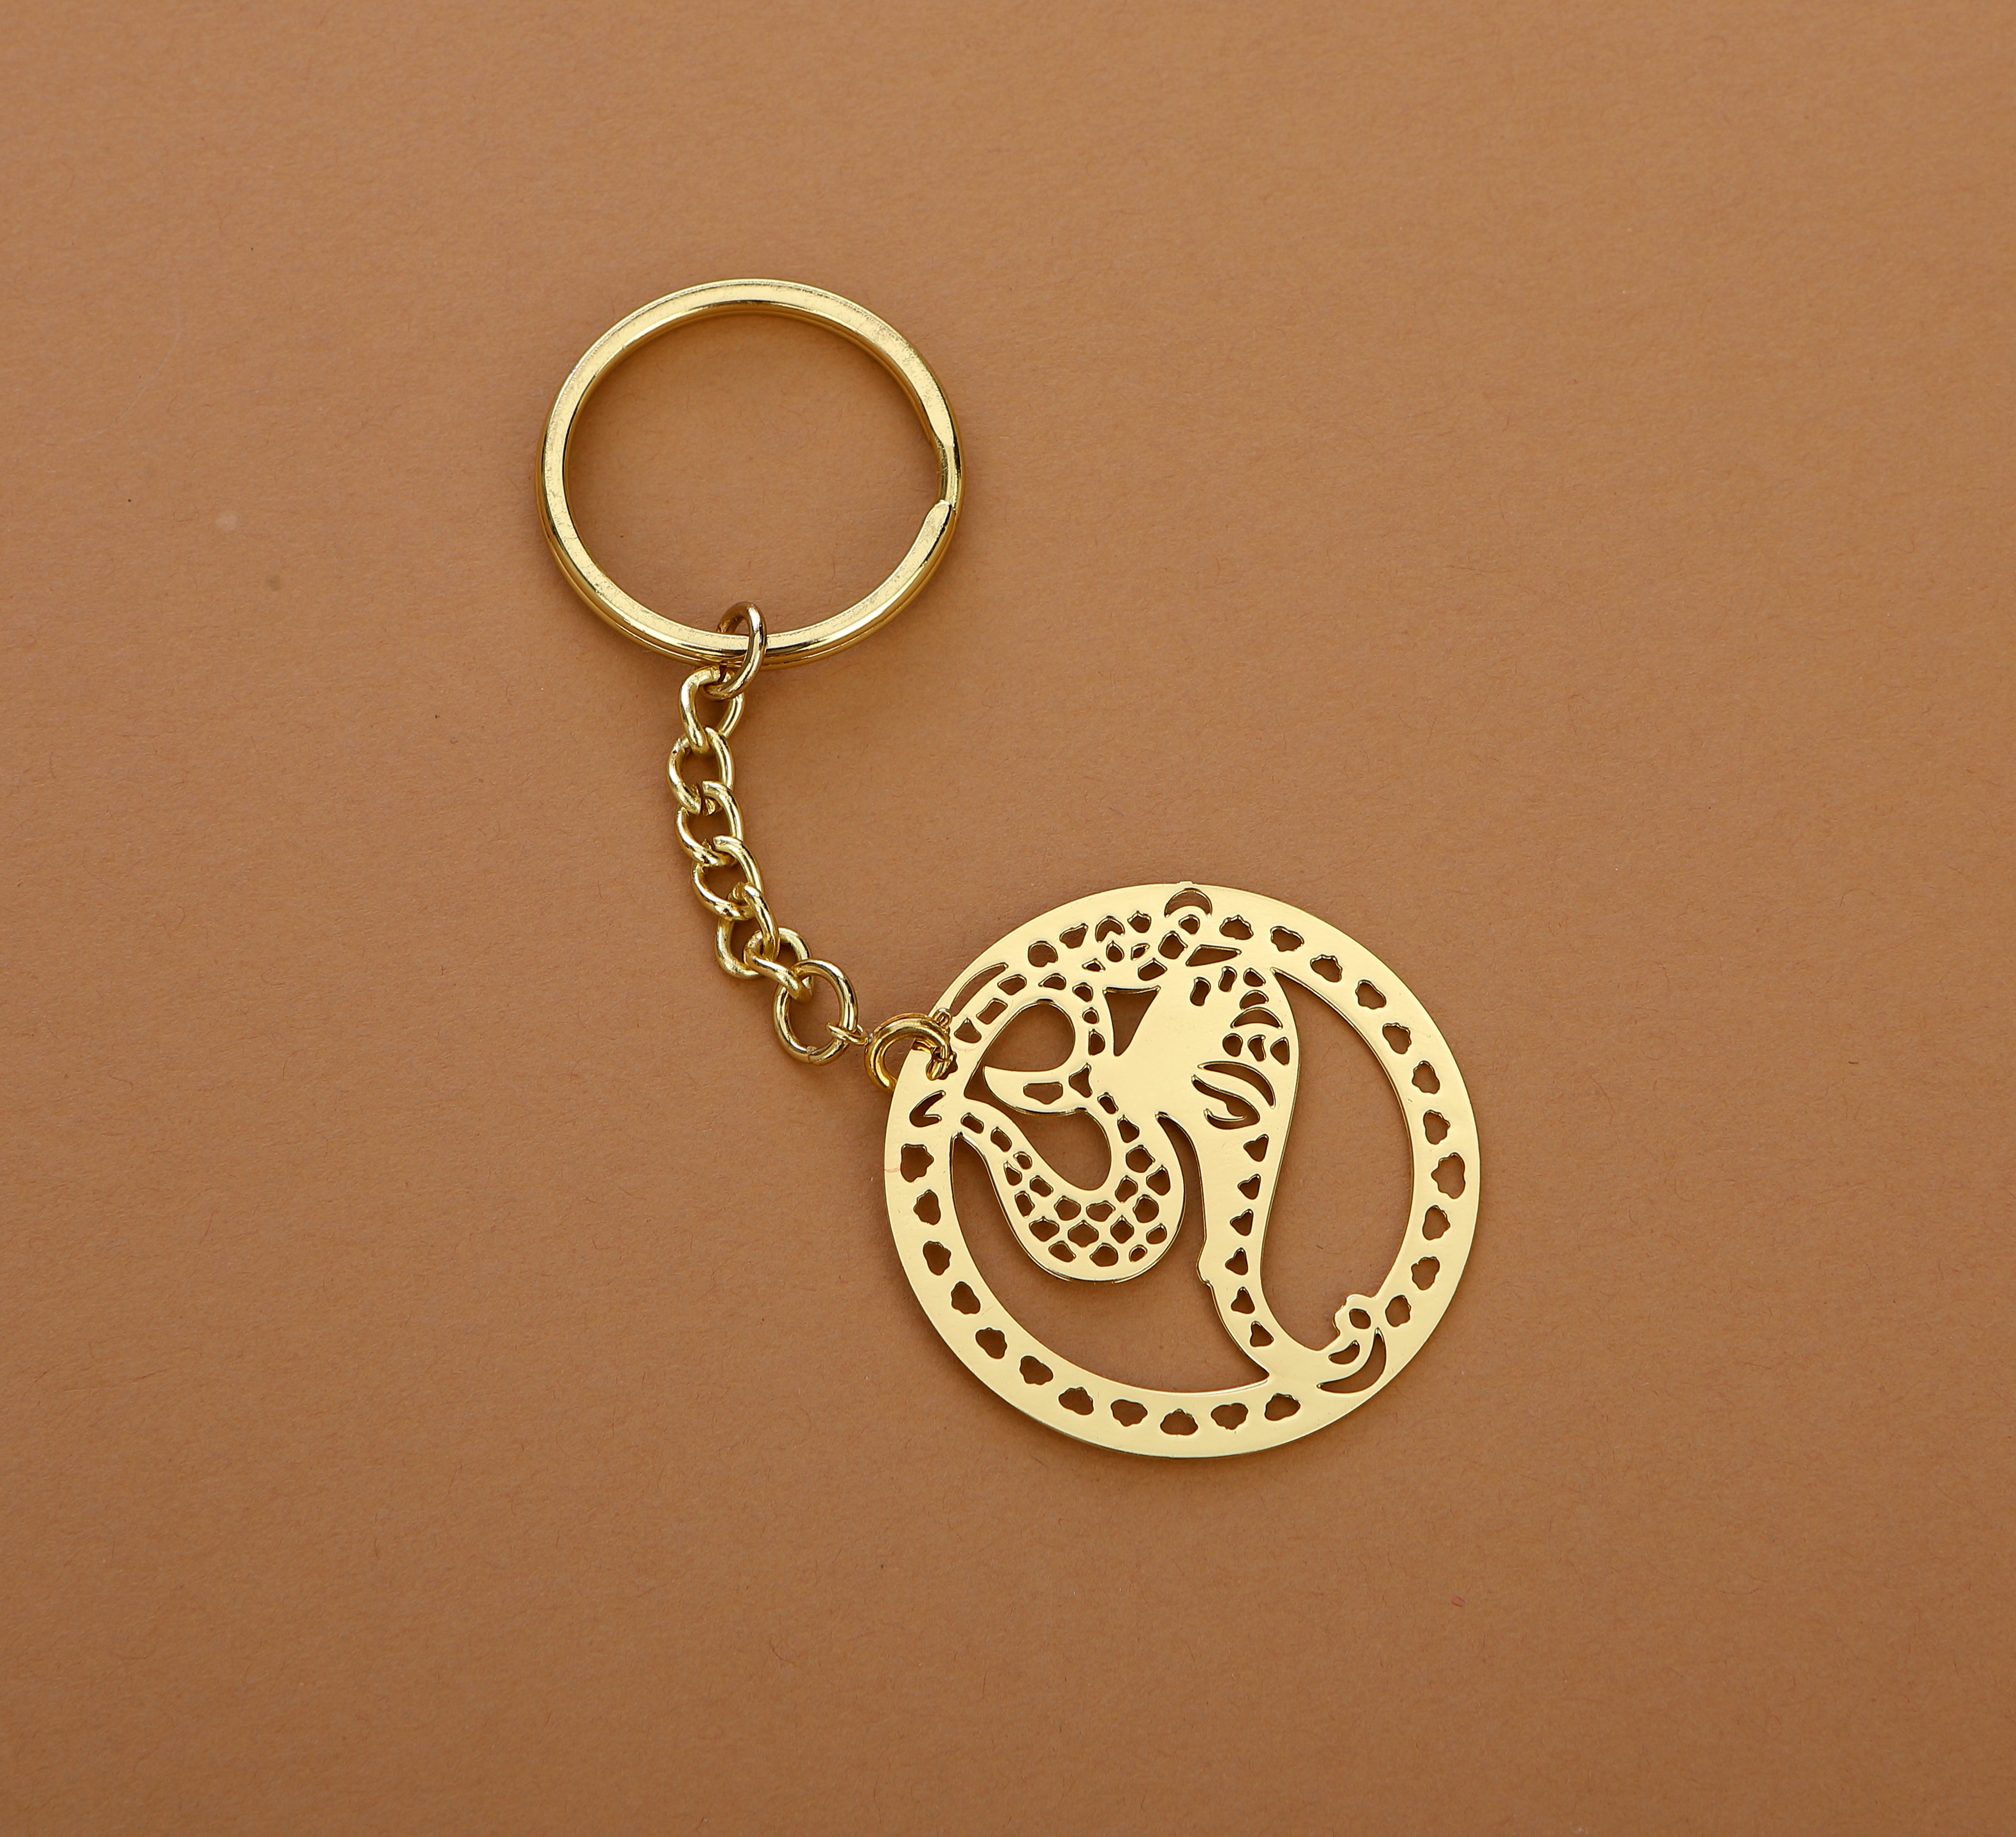 Adoraa's Om Ganesha Brass Key Chain Ring in Golden Finish